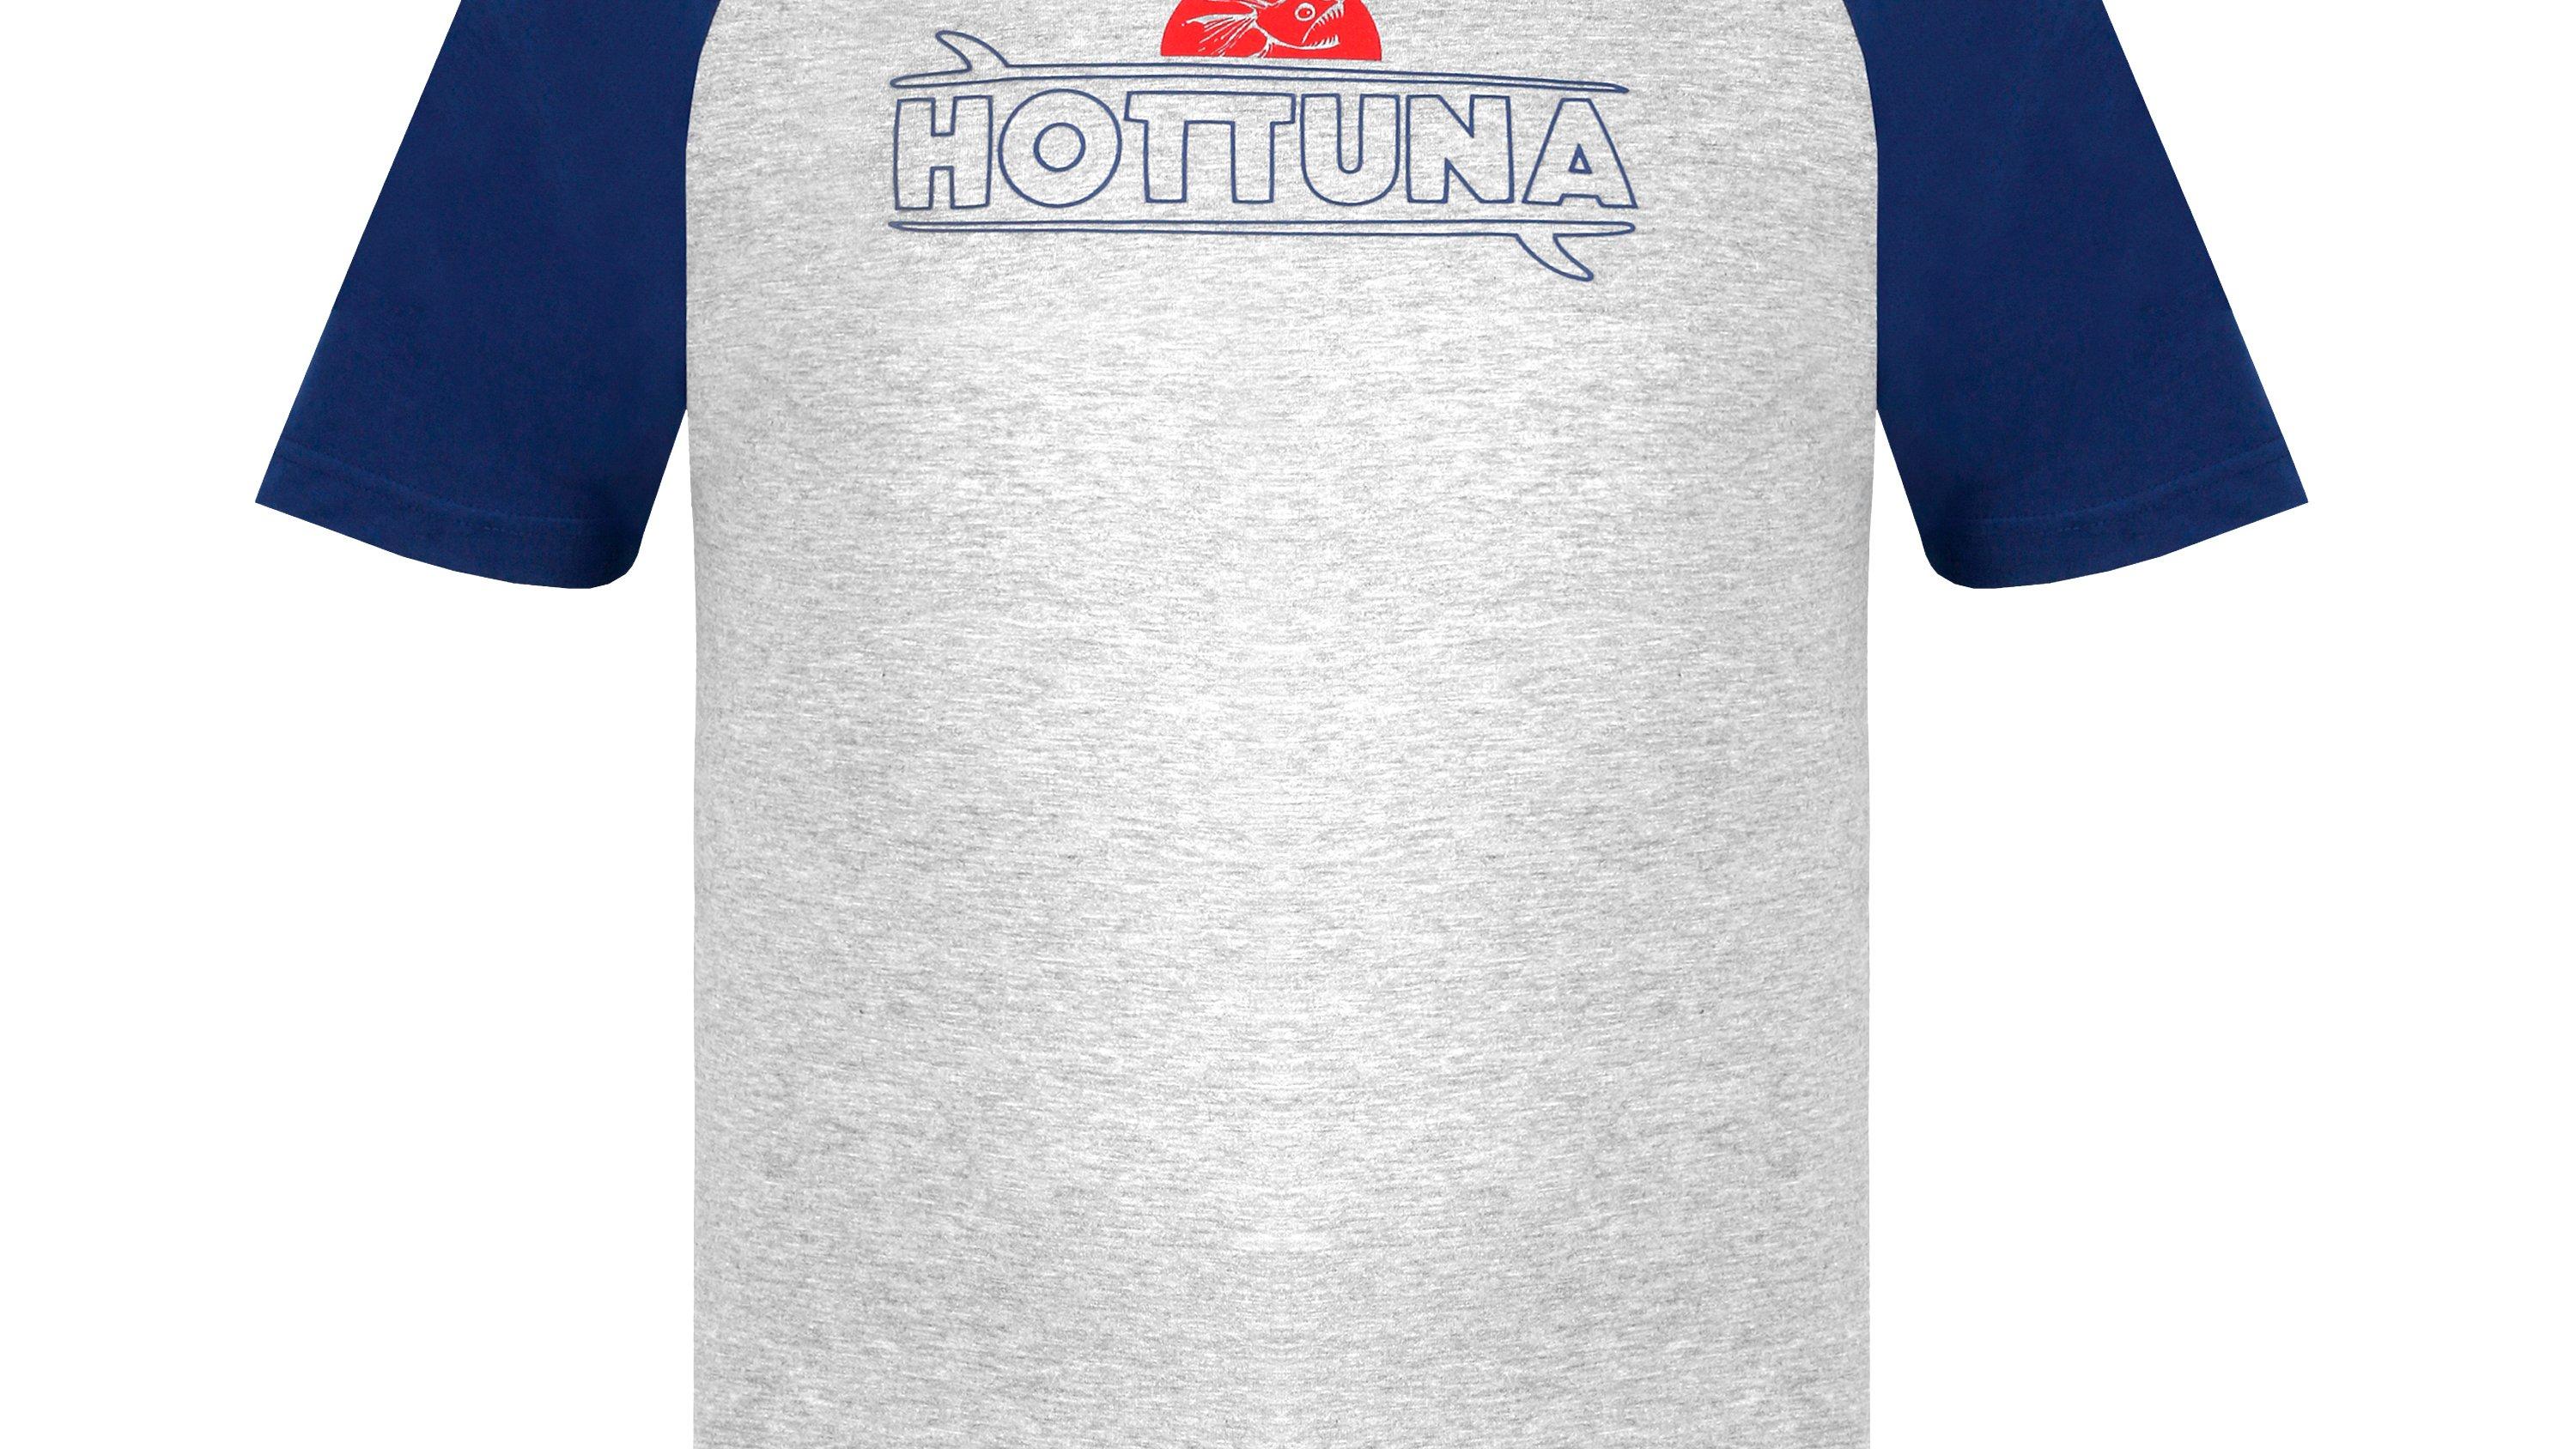 HOT TUNA Hot Tuna NOM NOM - T-Shirt - Men's - white - Private